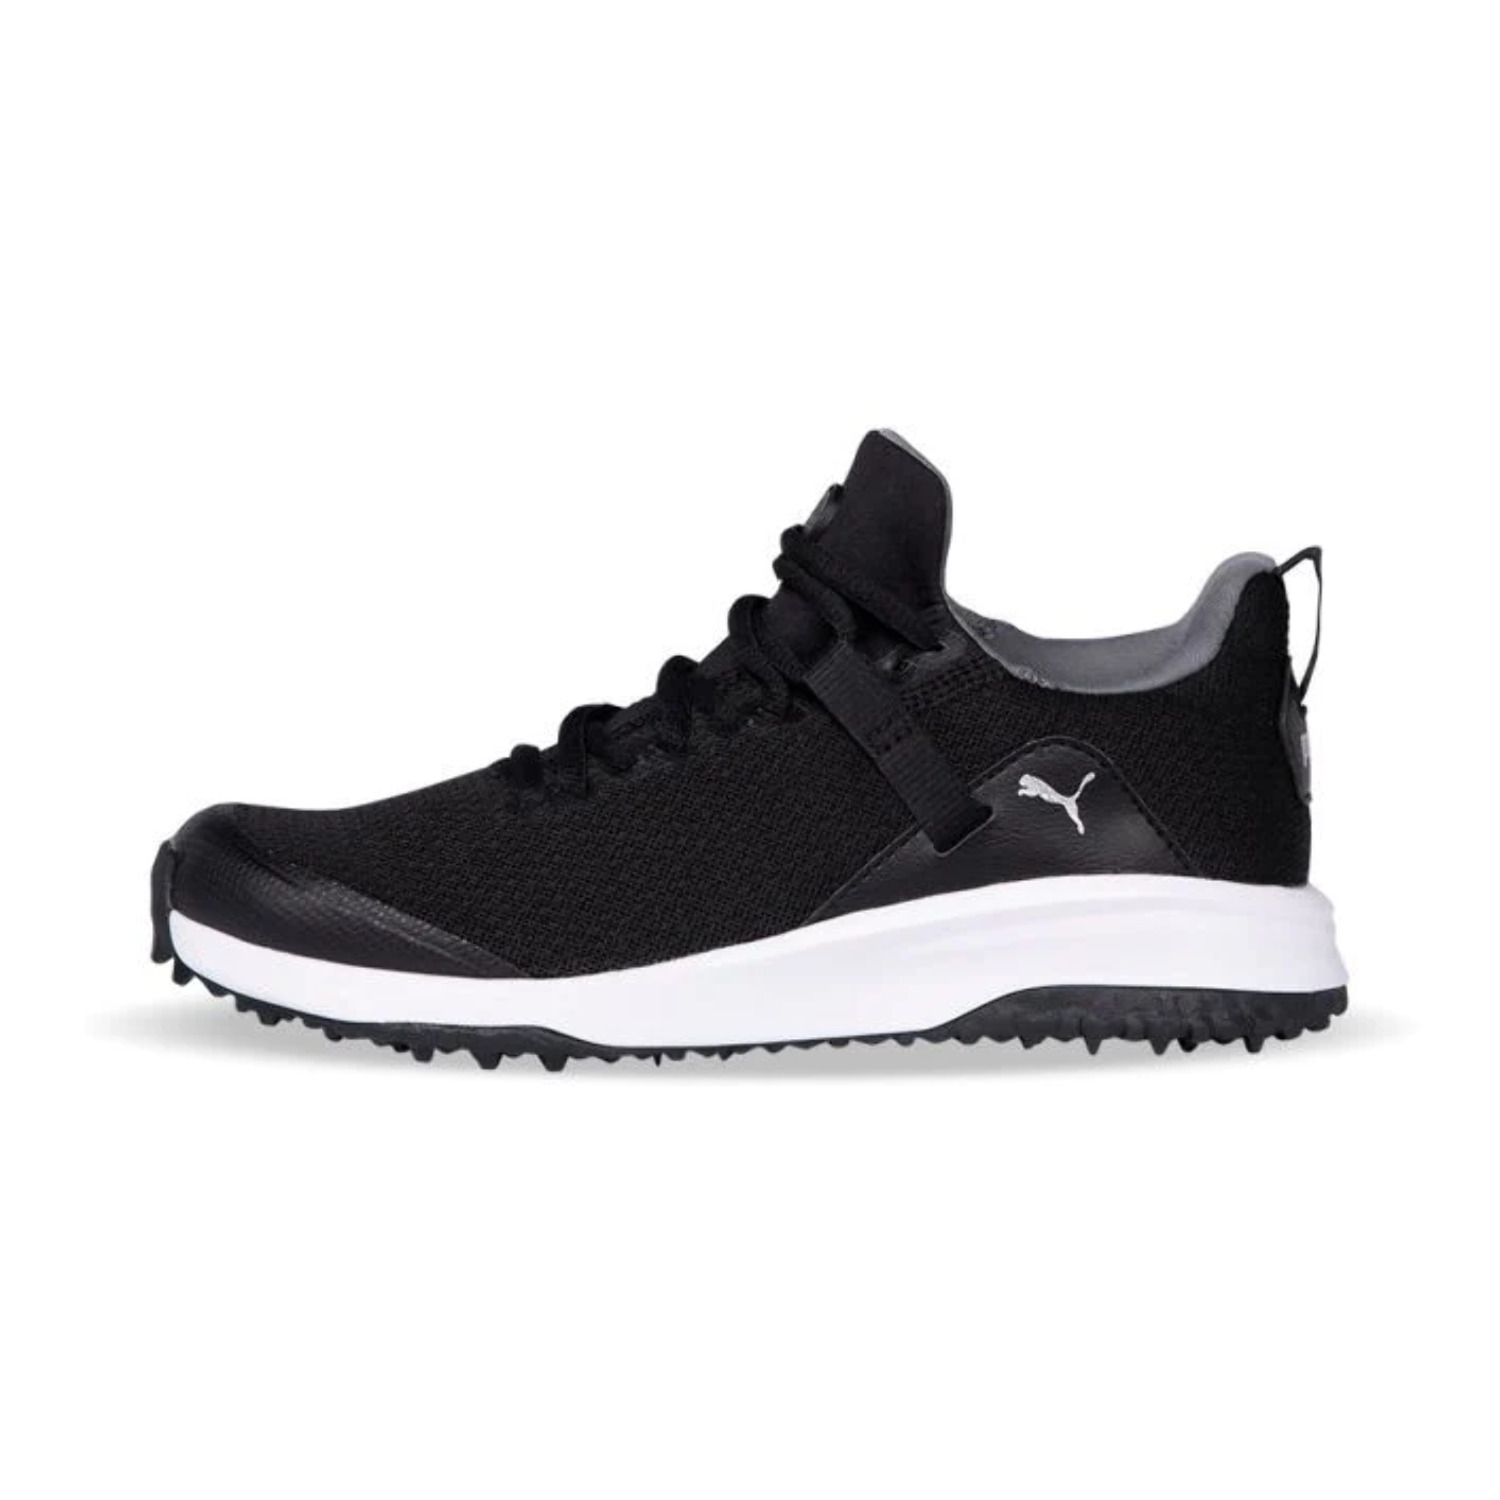 NEW Men's Puma Fusion Evo Spikeless Golf Shoes Puma Black/Quiet Shade 13 M - image 1 of 9